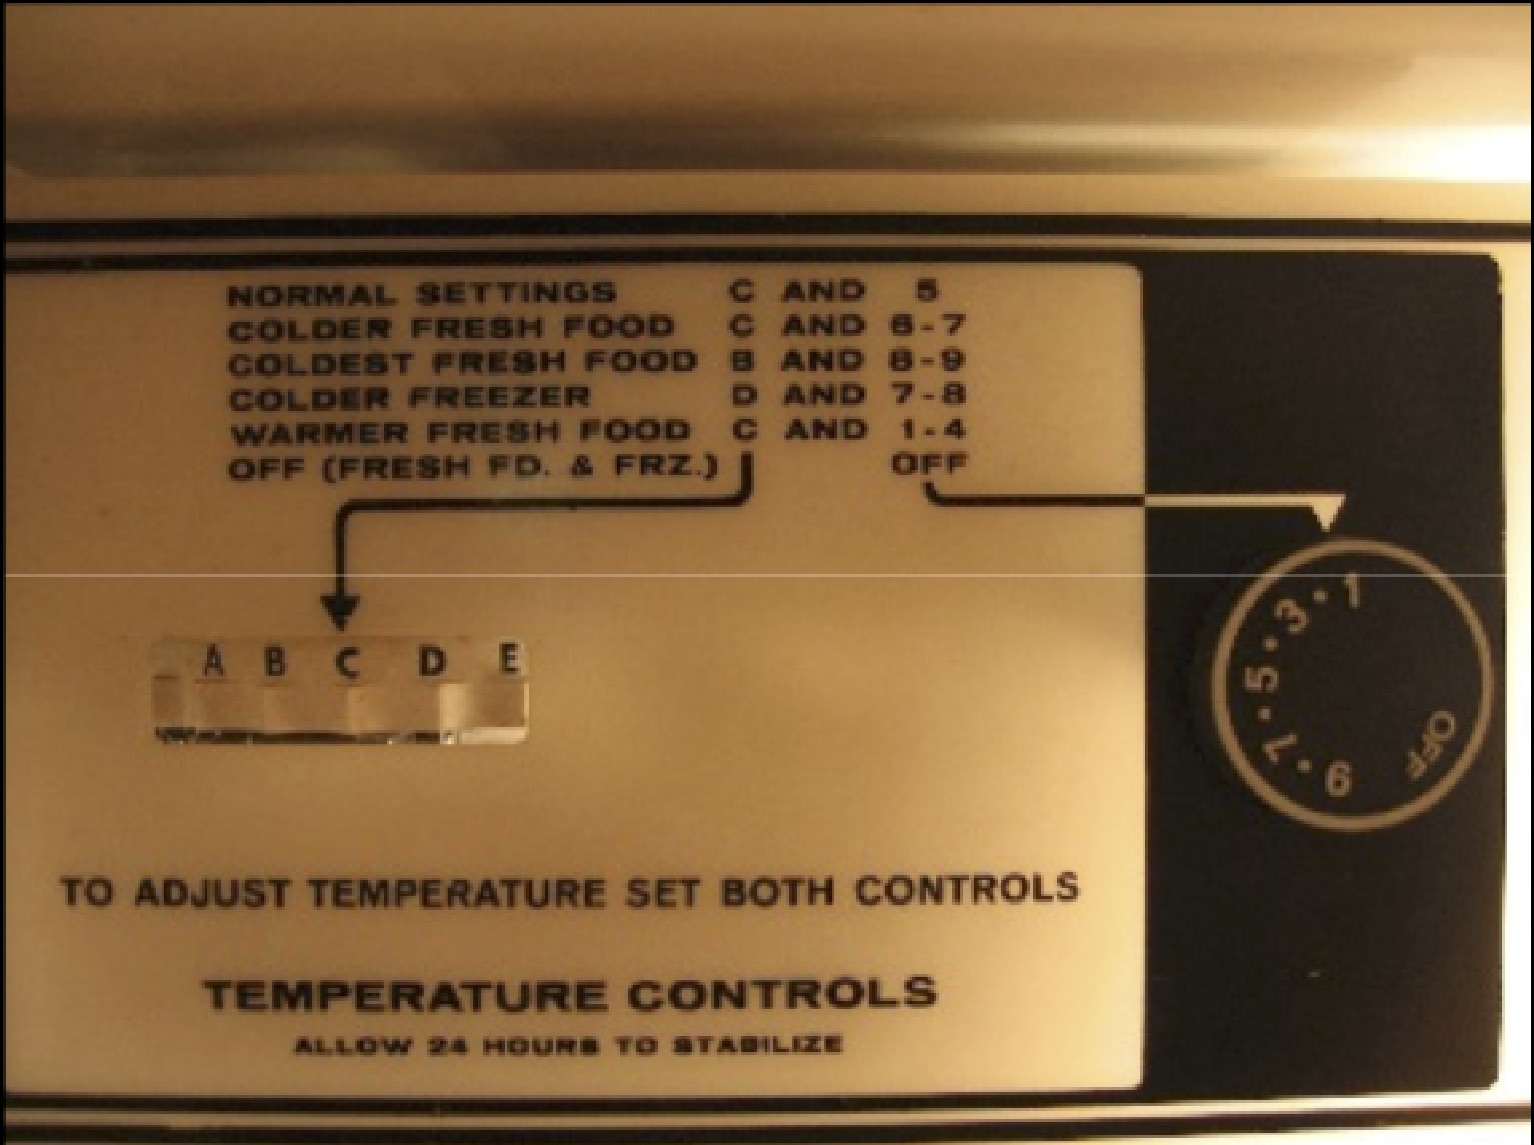 A freezer control knob showing A-E, several number ranges, and several text descriptions of freezer temperatures